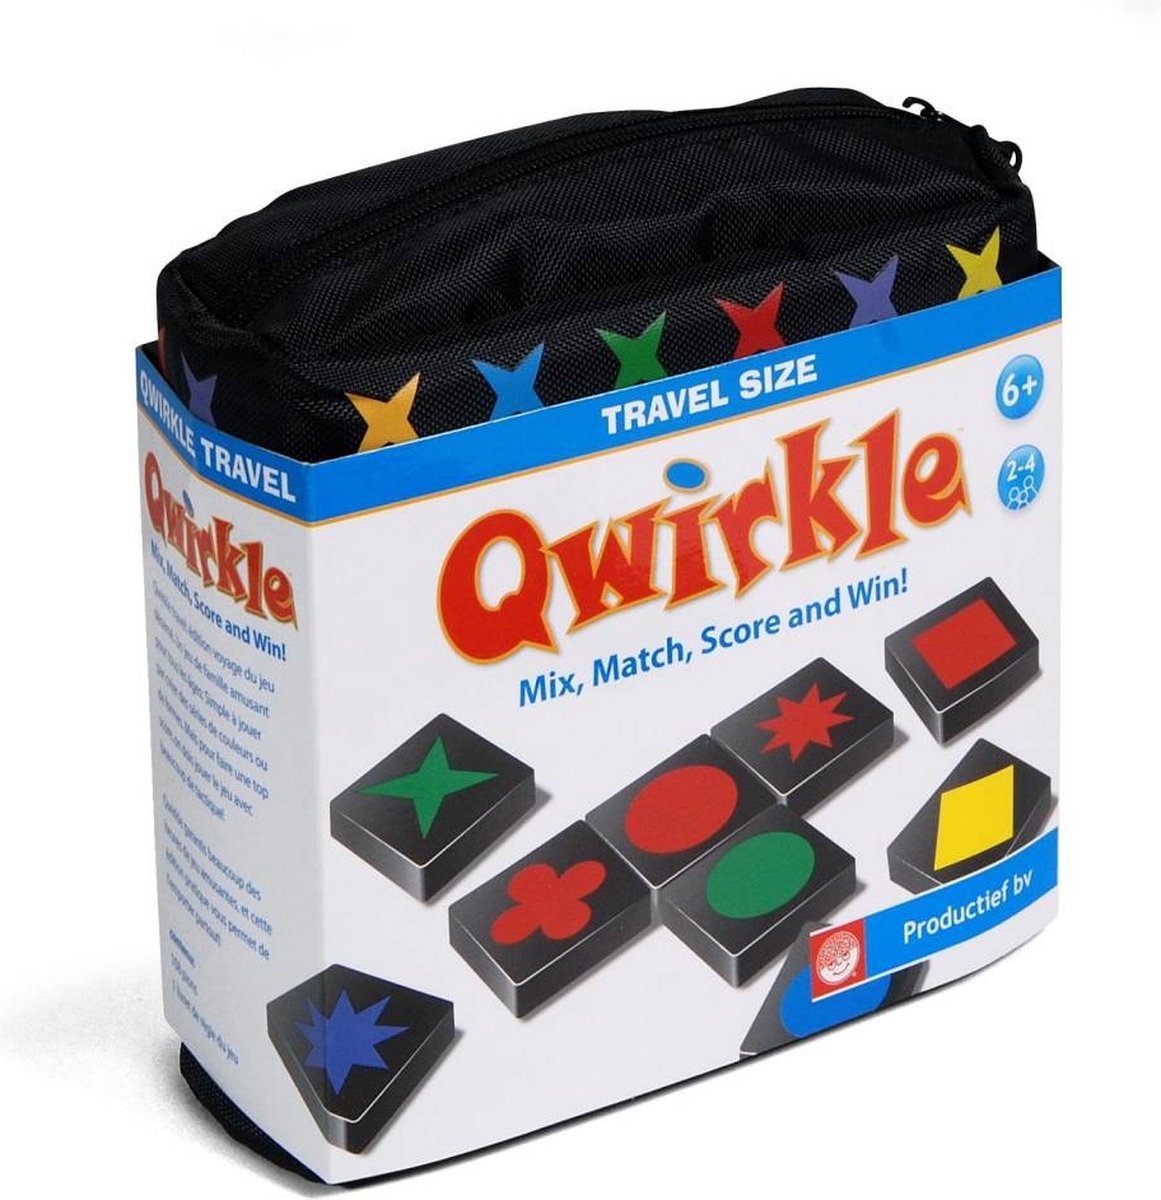 Qwirkle Reiseditie Bordspel - 999 Games